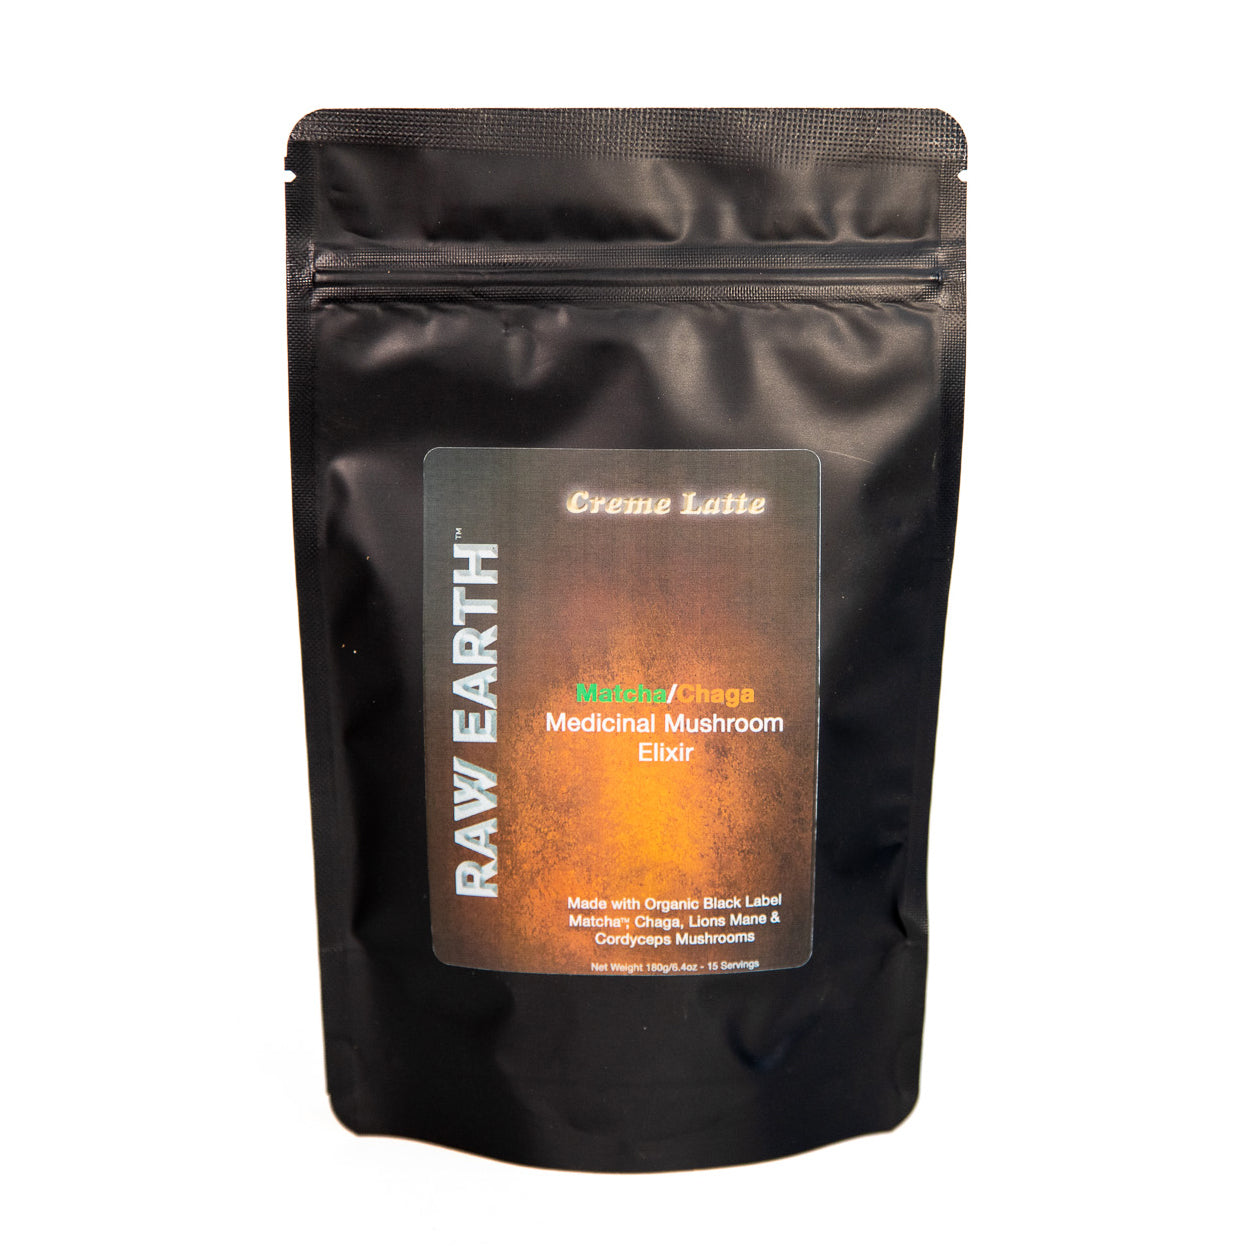 Raw Earth Functional Mushroom Elixir - Creme Latte - 150g - chagit360